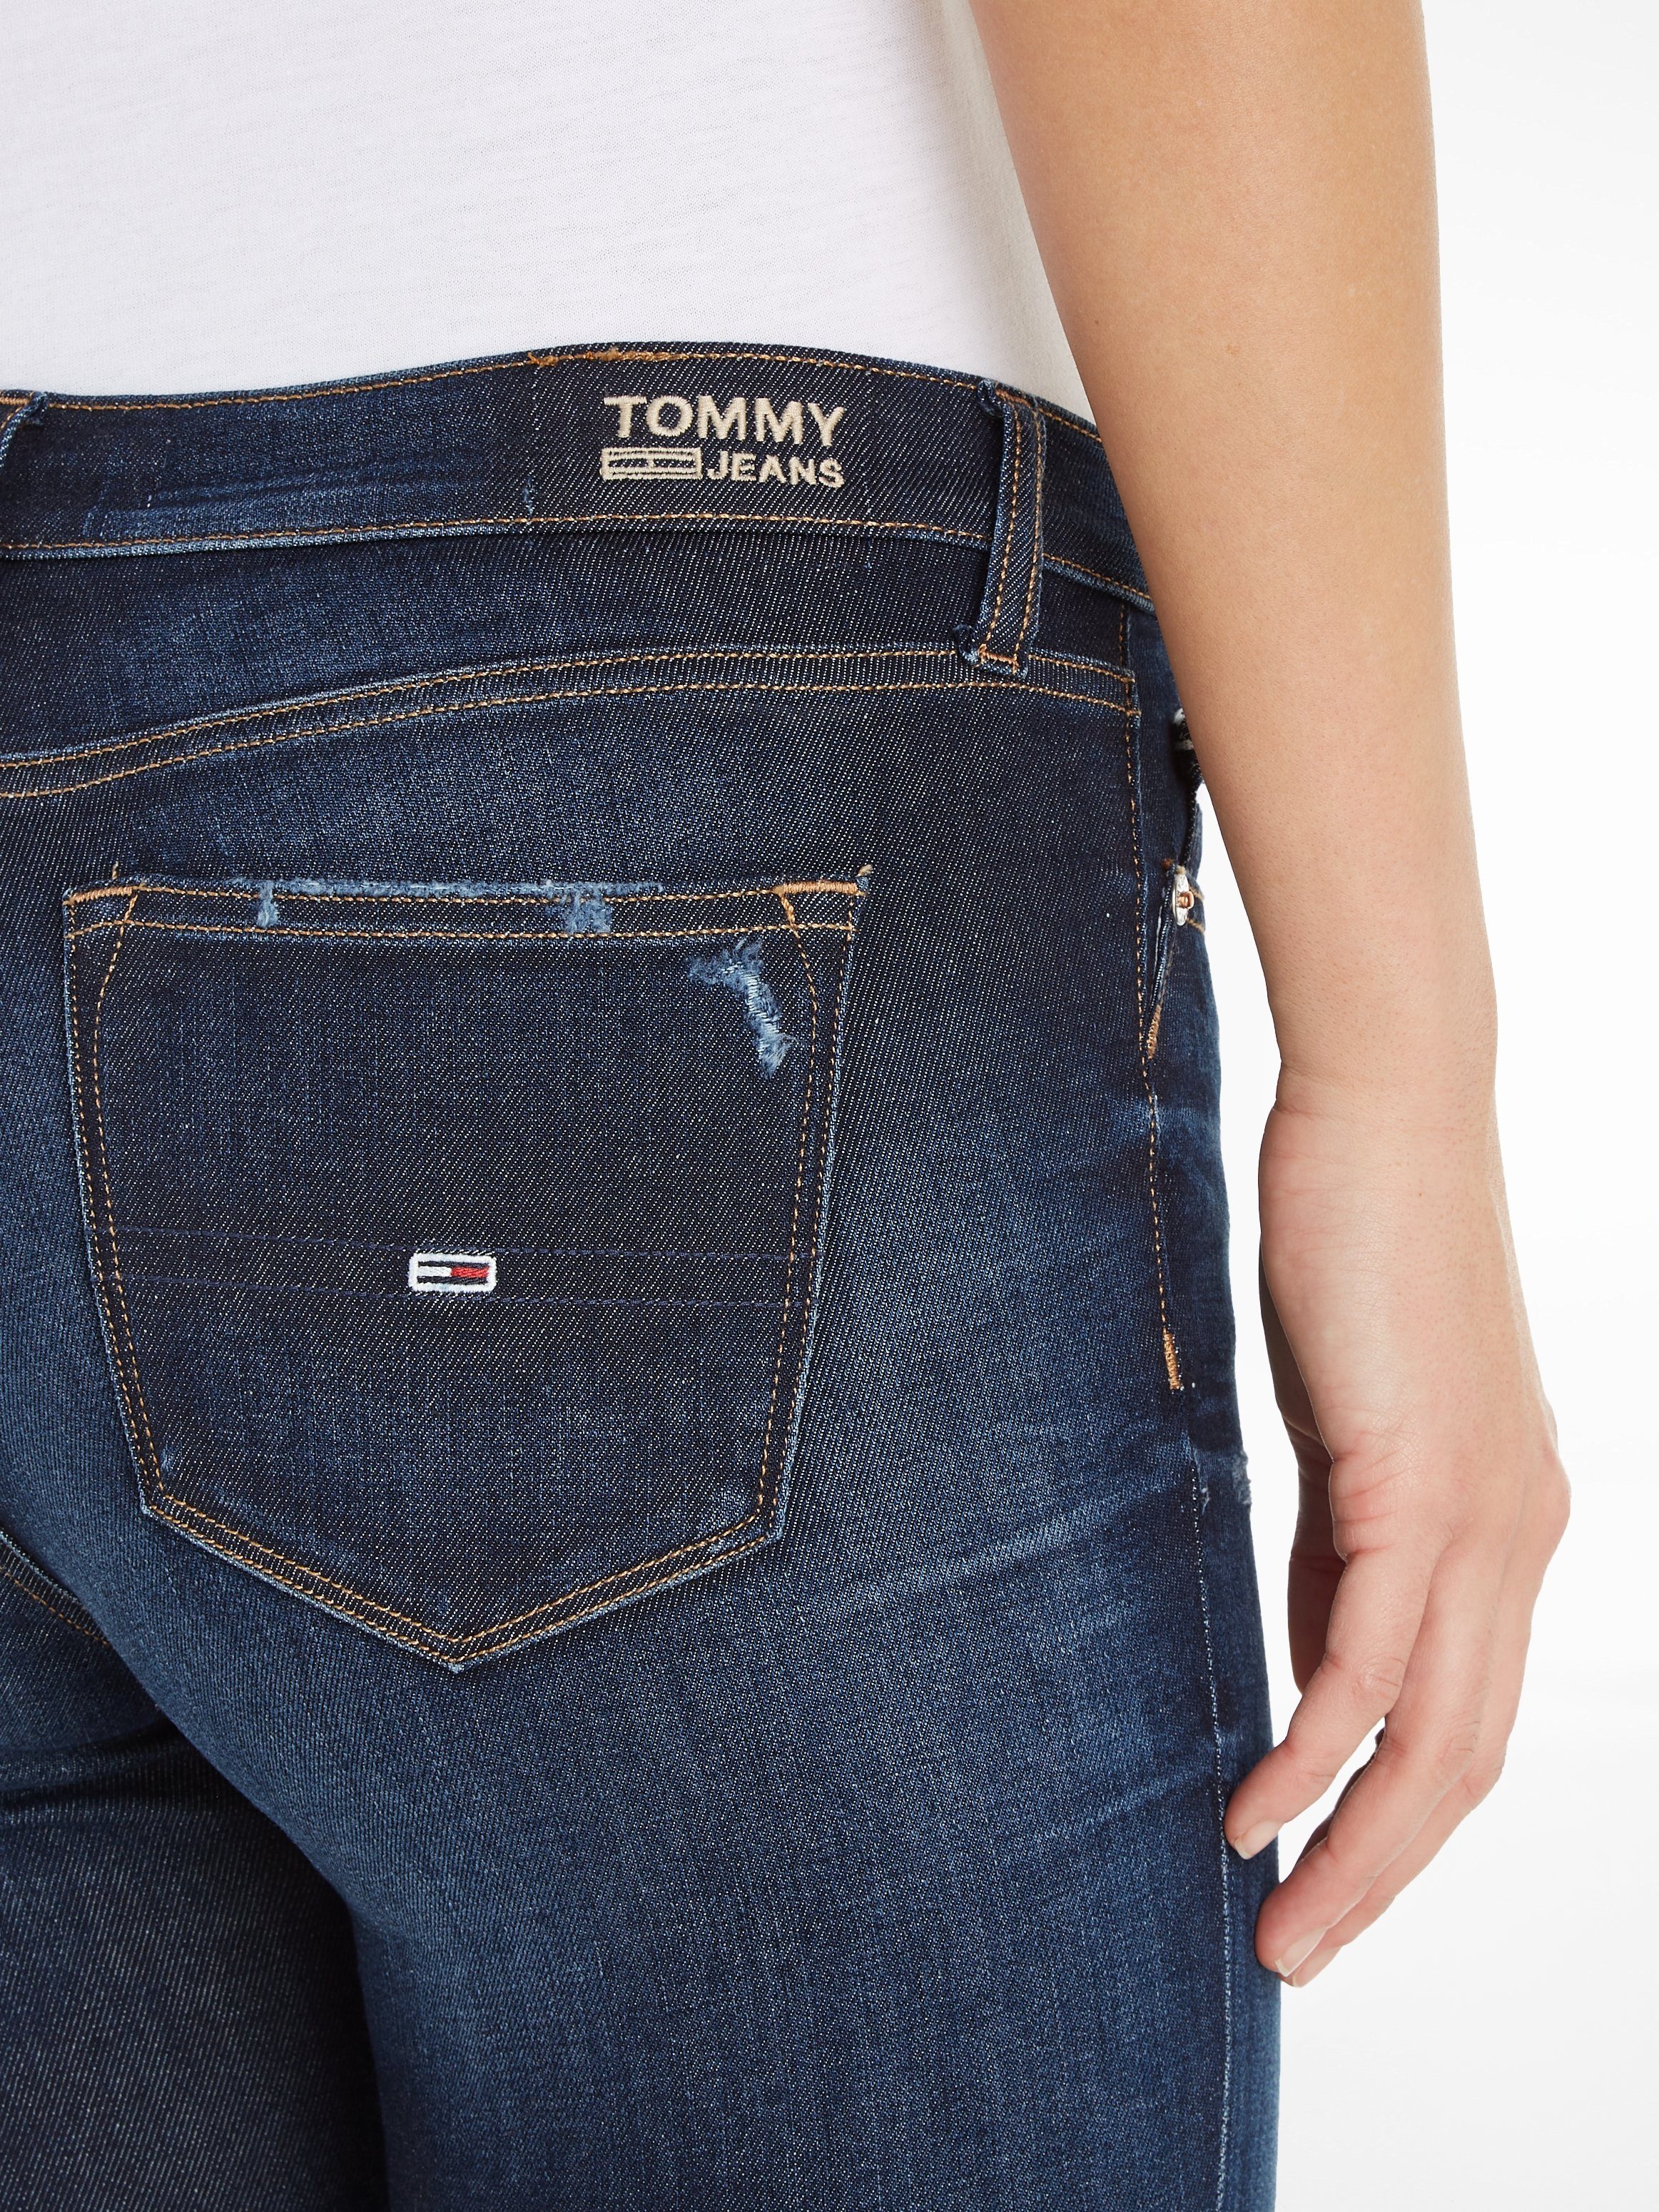 Tommy Jeans Skinny-fit-Jeans mit Tommy Markenlabel Jeans Denim_dark